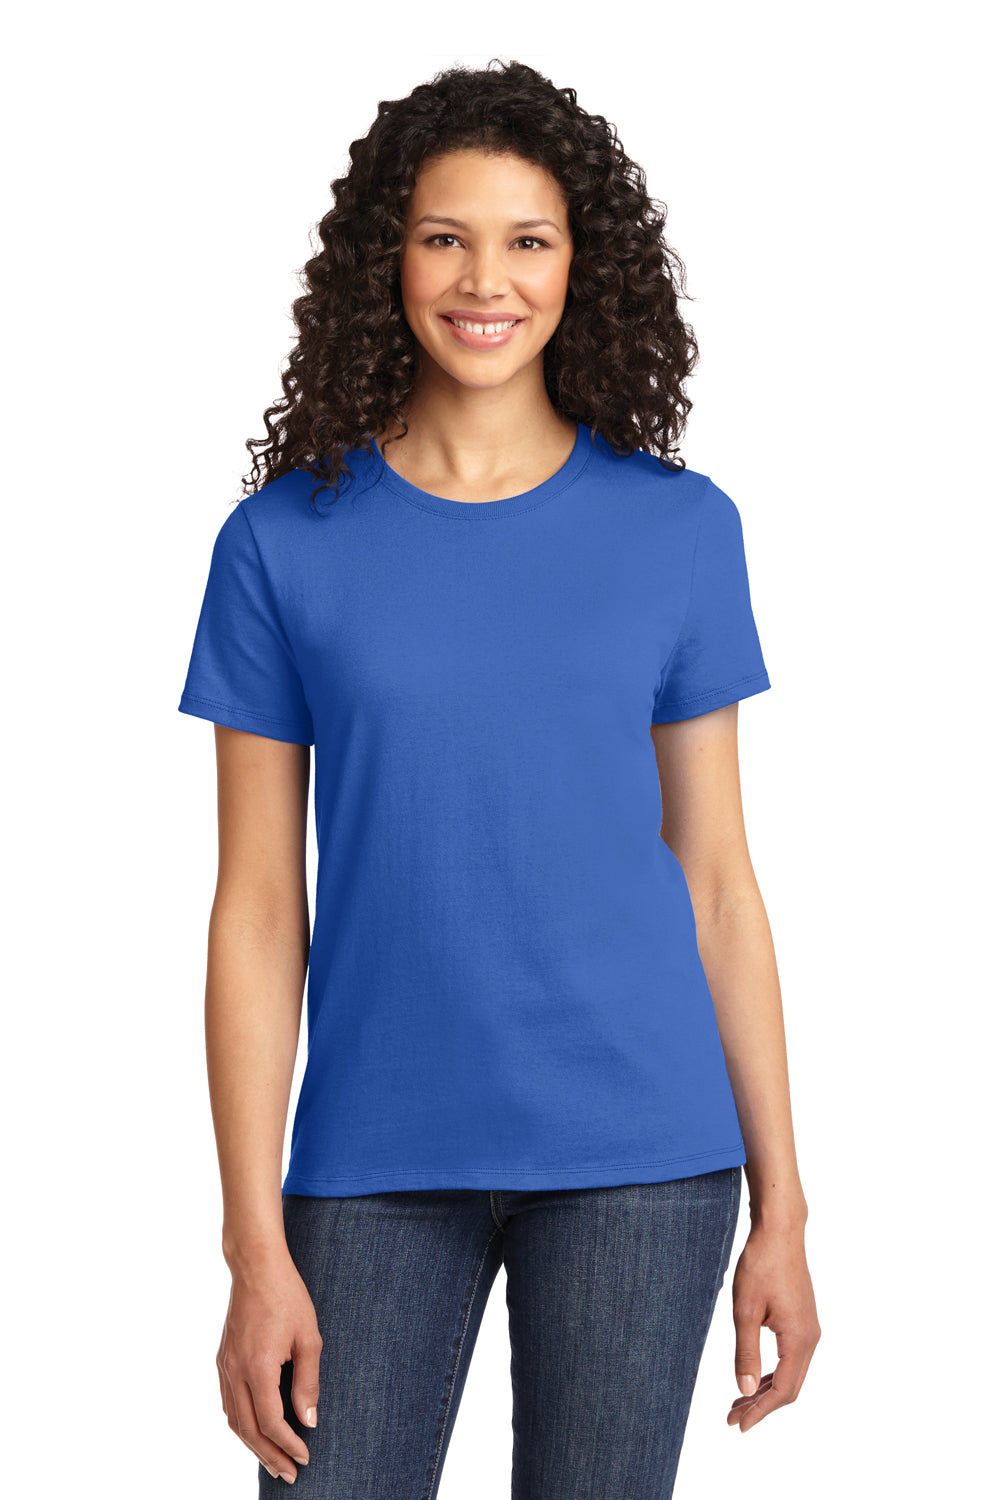 Port & Company LPC61 Womens Essential Short Sleeve Crewneck T-Shirt Royal Blue Front